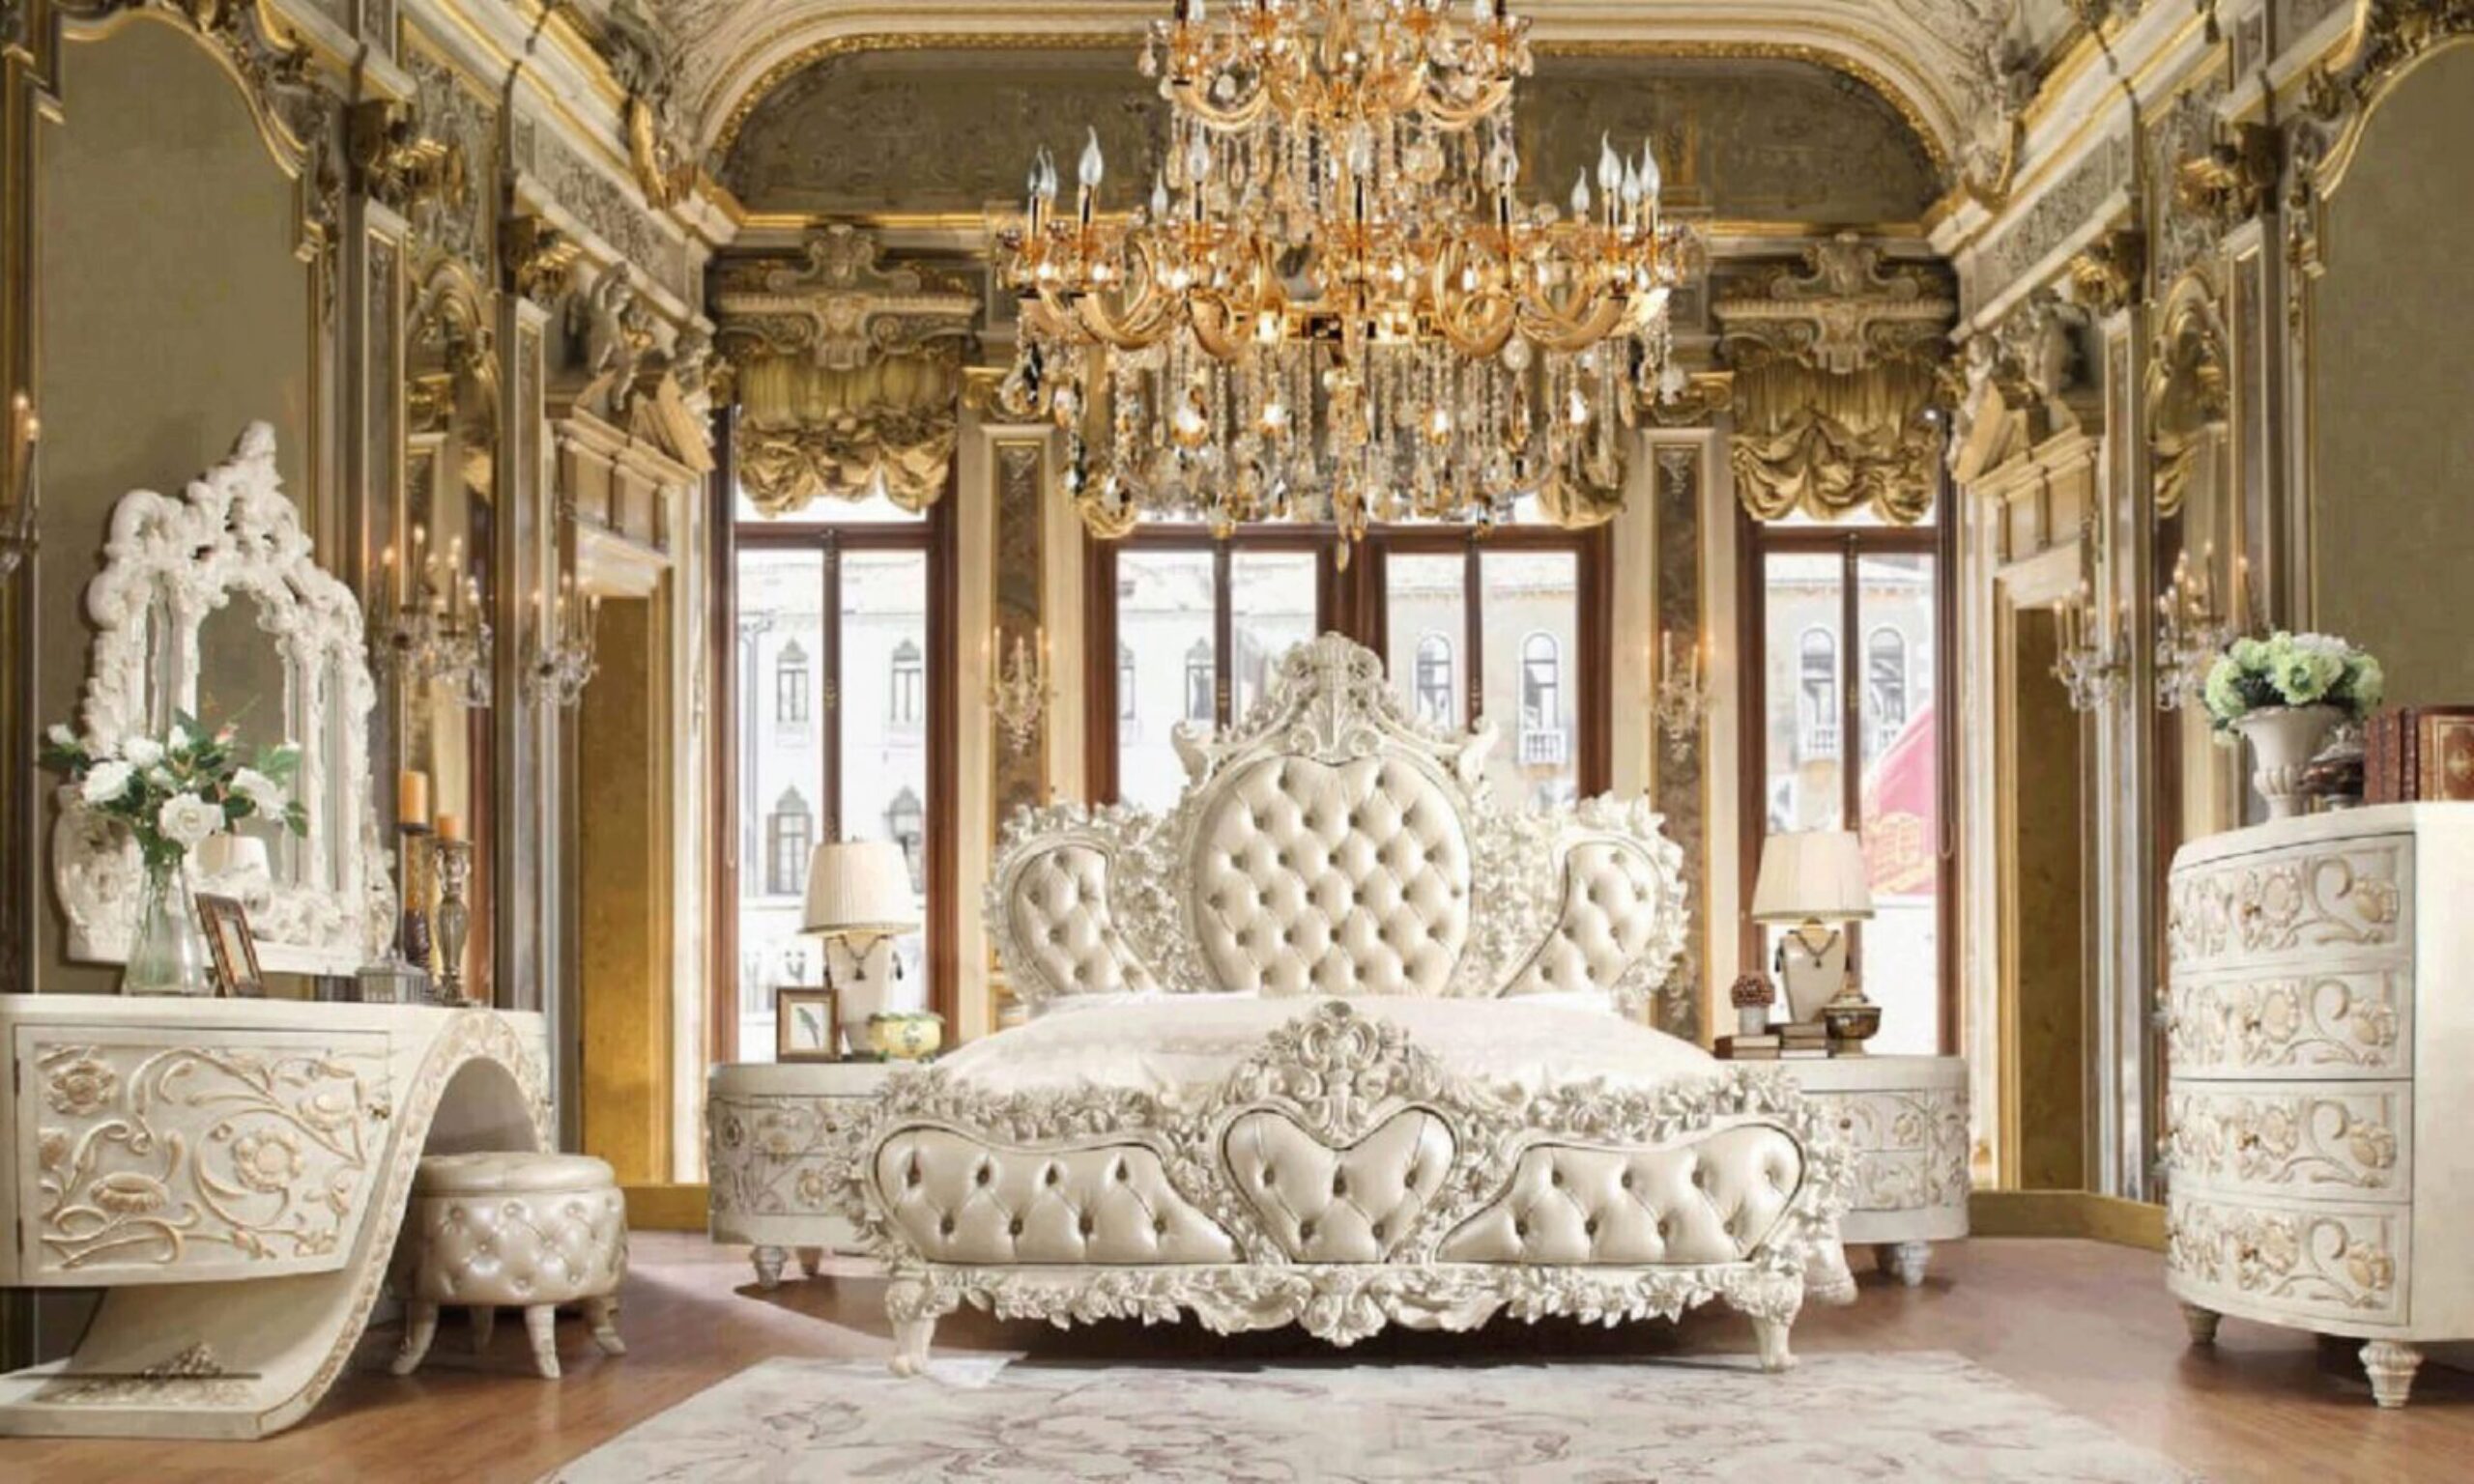 Luxurious Bedroom Furniture Options